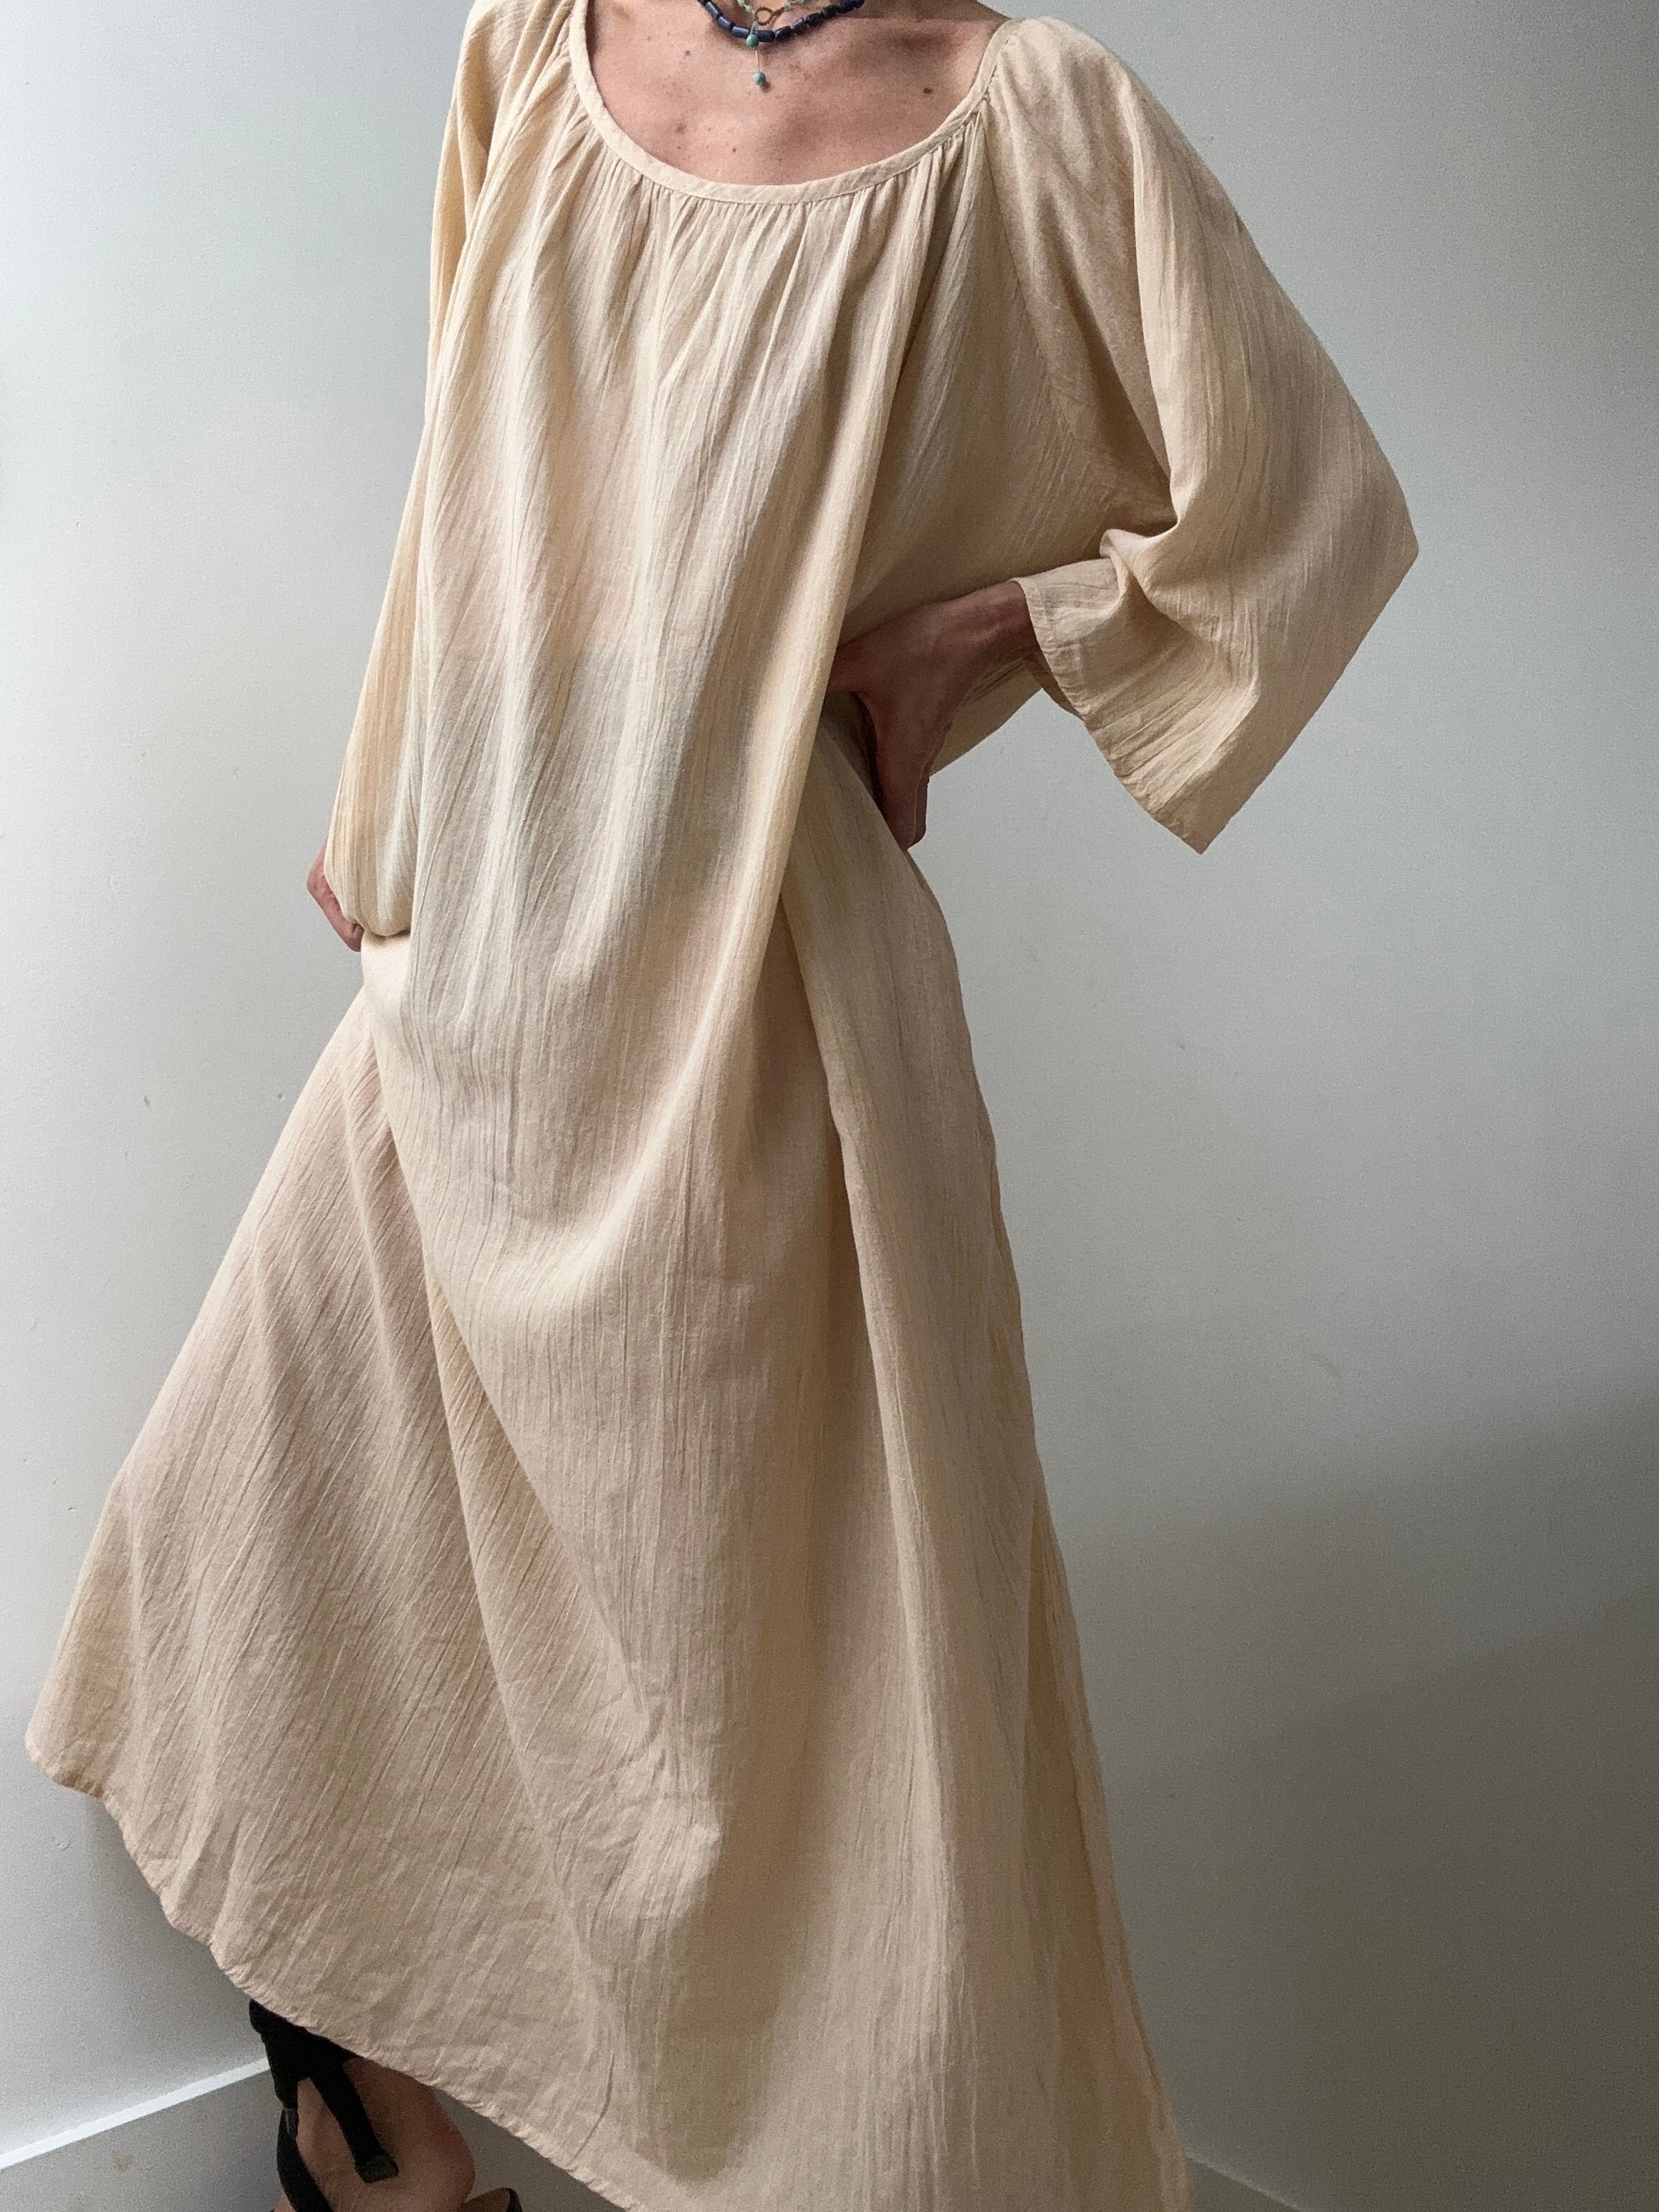 Jetsetbohemian Dresses One Size Round Neck Cotton Dress in Biege